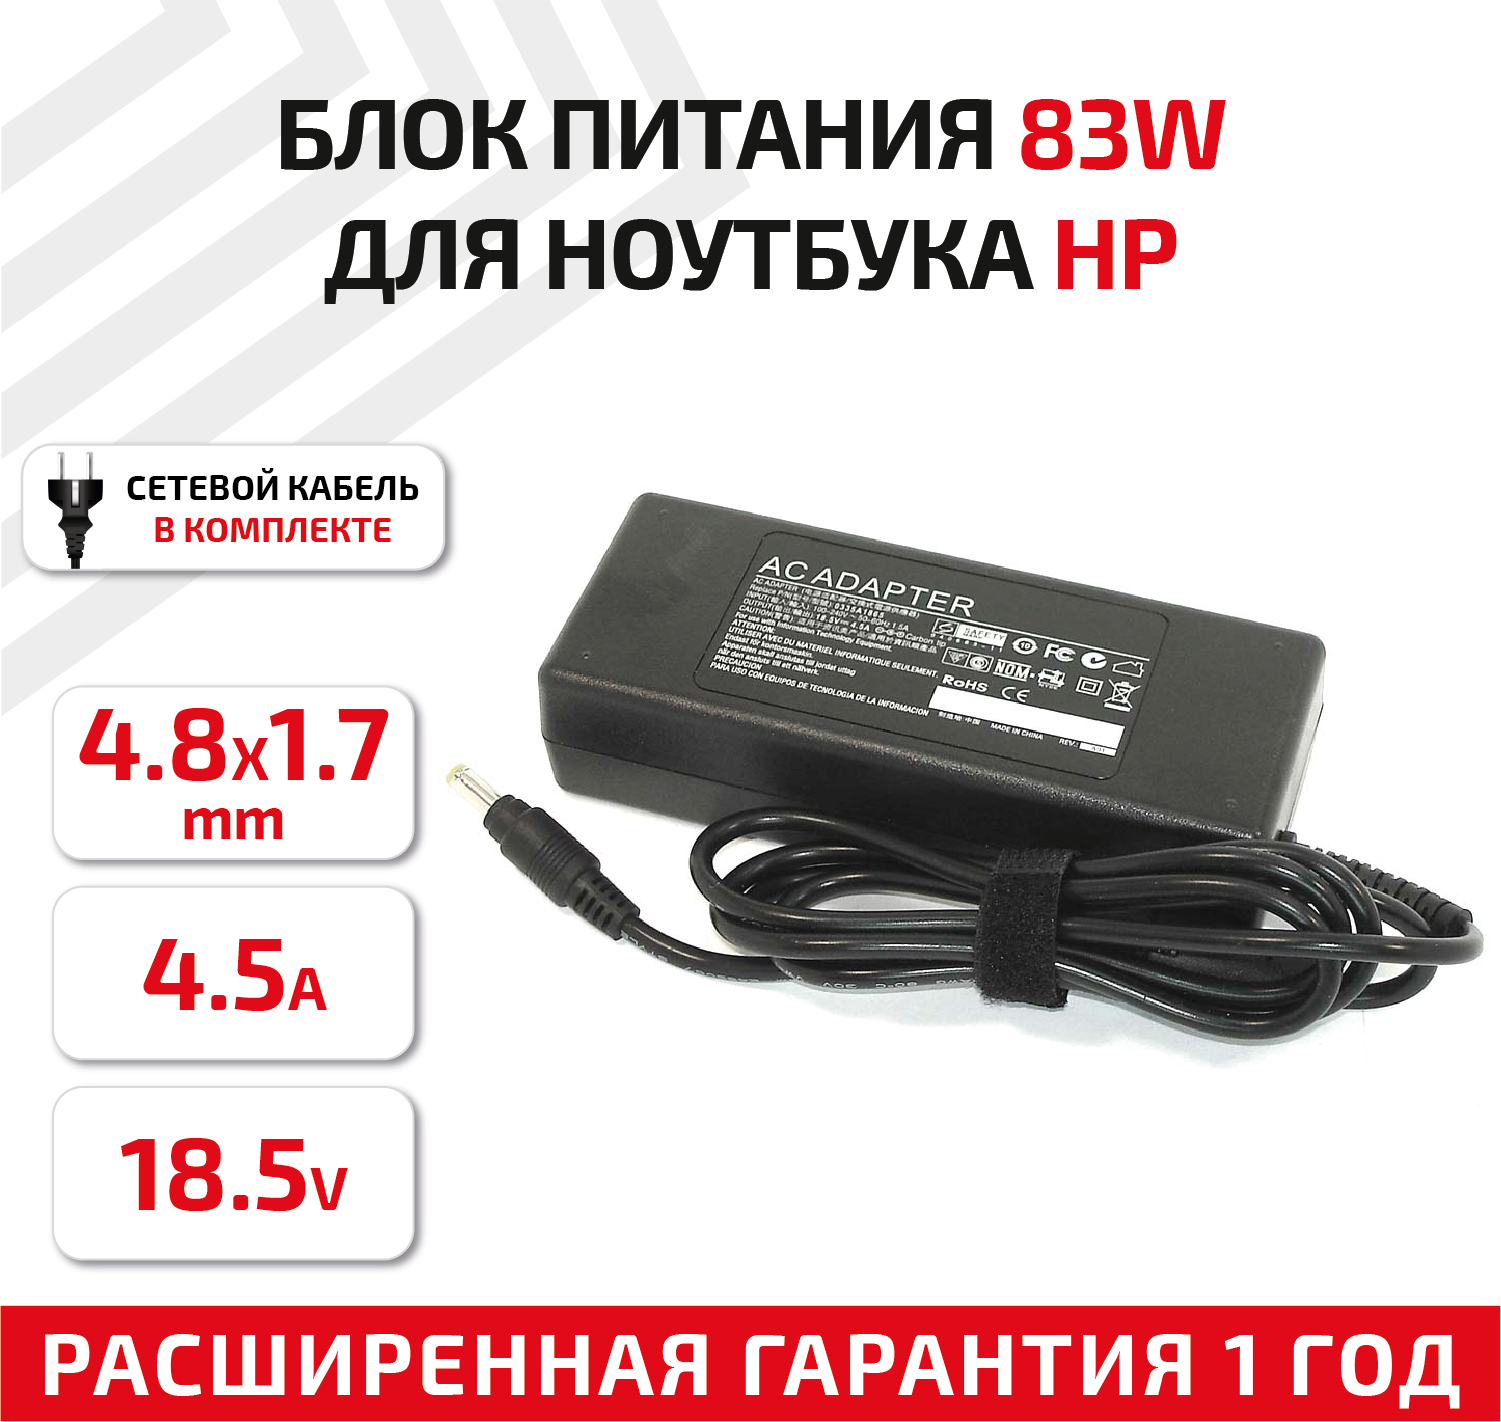 Зарядное устройство (блок питания/зарядка) для ноутбука HP 18.5В, 4.5А, 83Вт, 4.8x1.7мм